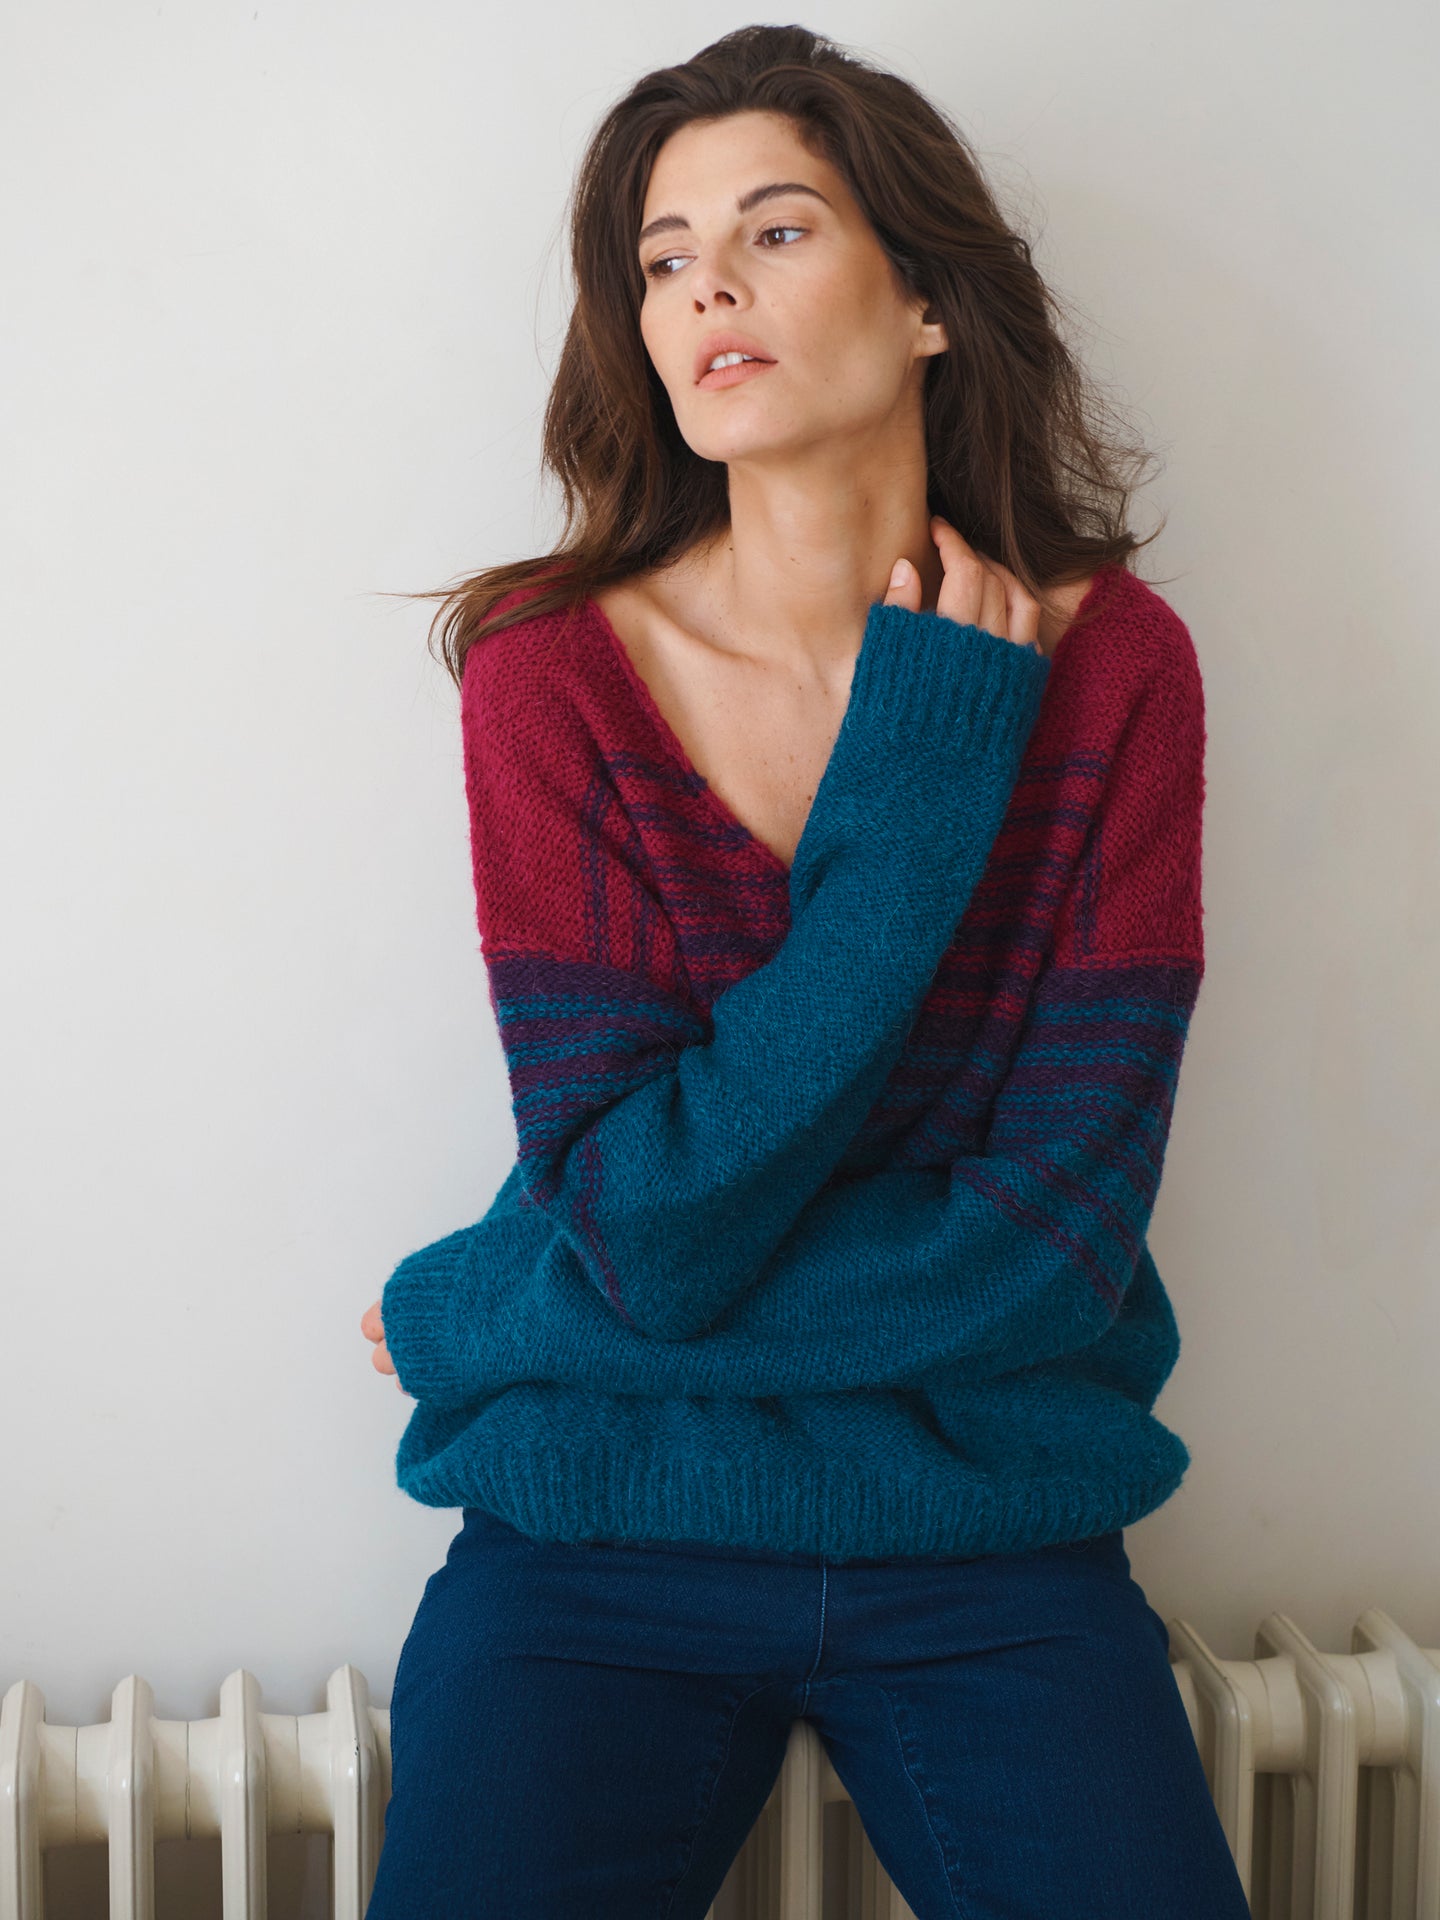 Free Assembly Women's Mix Stitch V-Neck Cardigan Sweater 